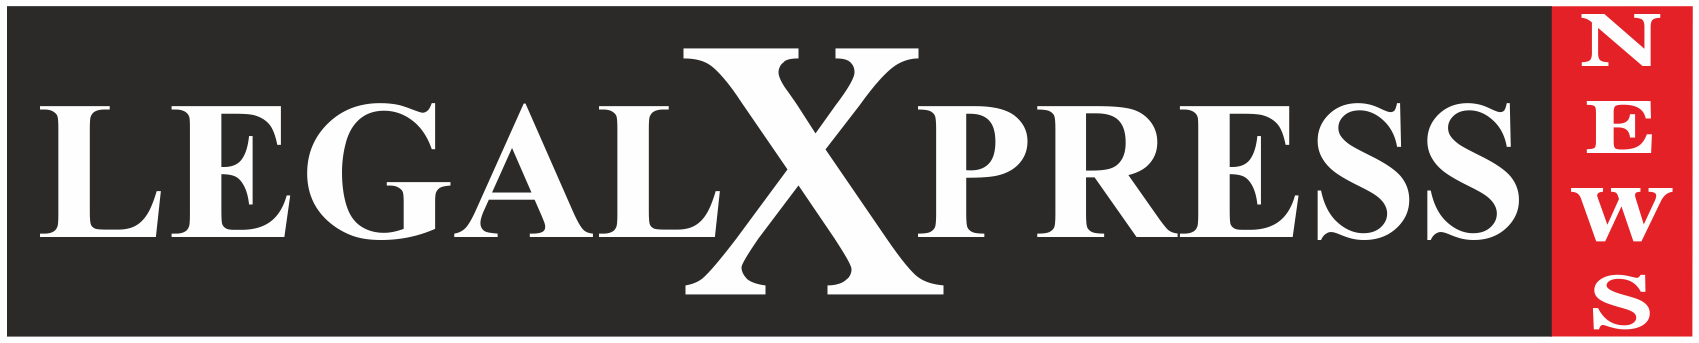 Legal Xpress News